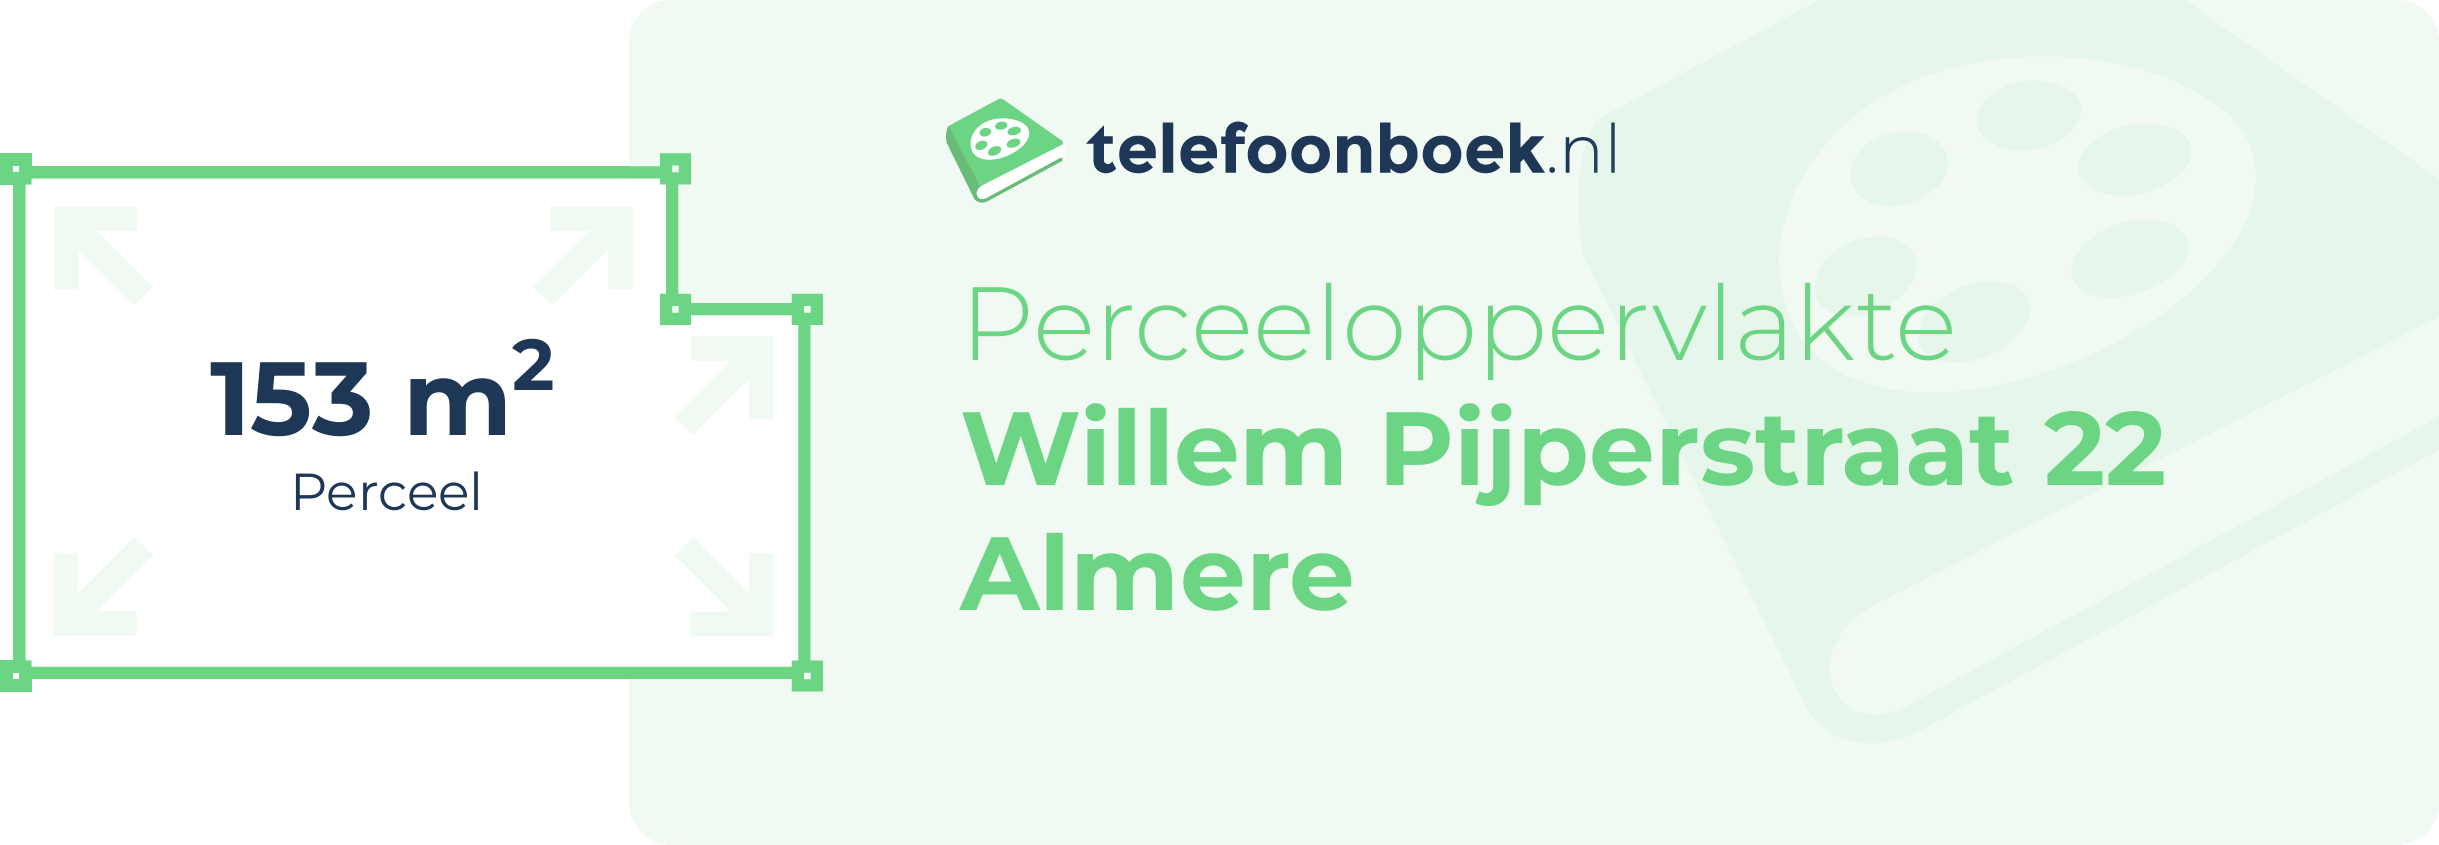 Perceeloppervlakte Willem Pijperstraat 22 Almere